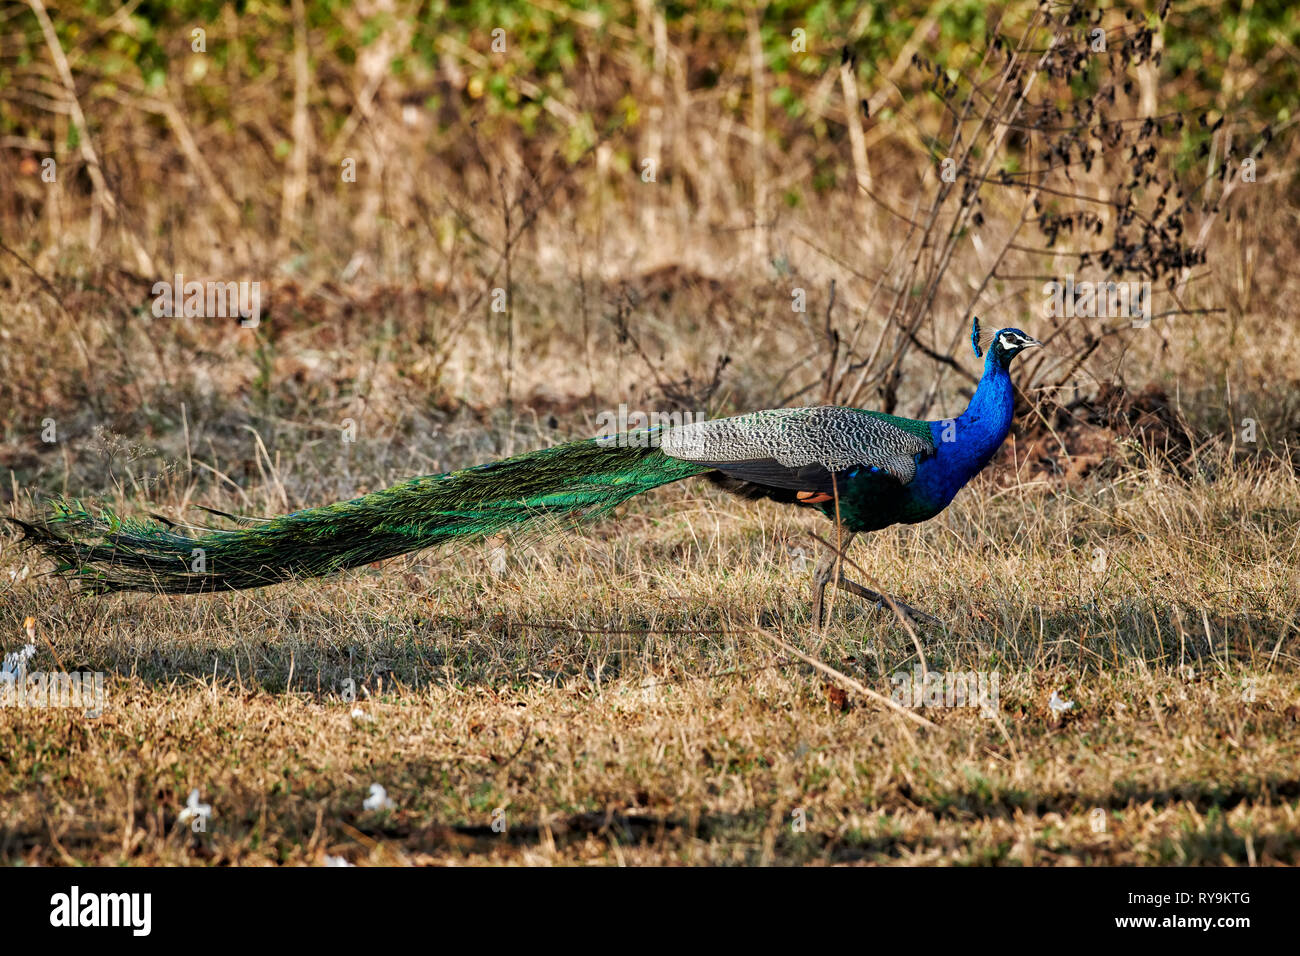 Peacock, Indian peafowl comunes o blue peafowl, Pavo cristatus, Reserva de Tigres Bandipur, Karnataka, India Foto de stock